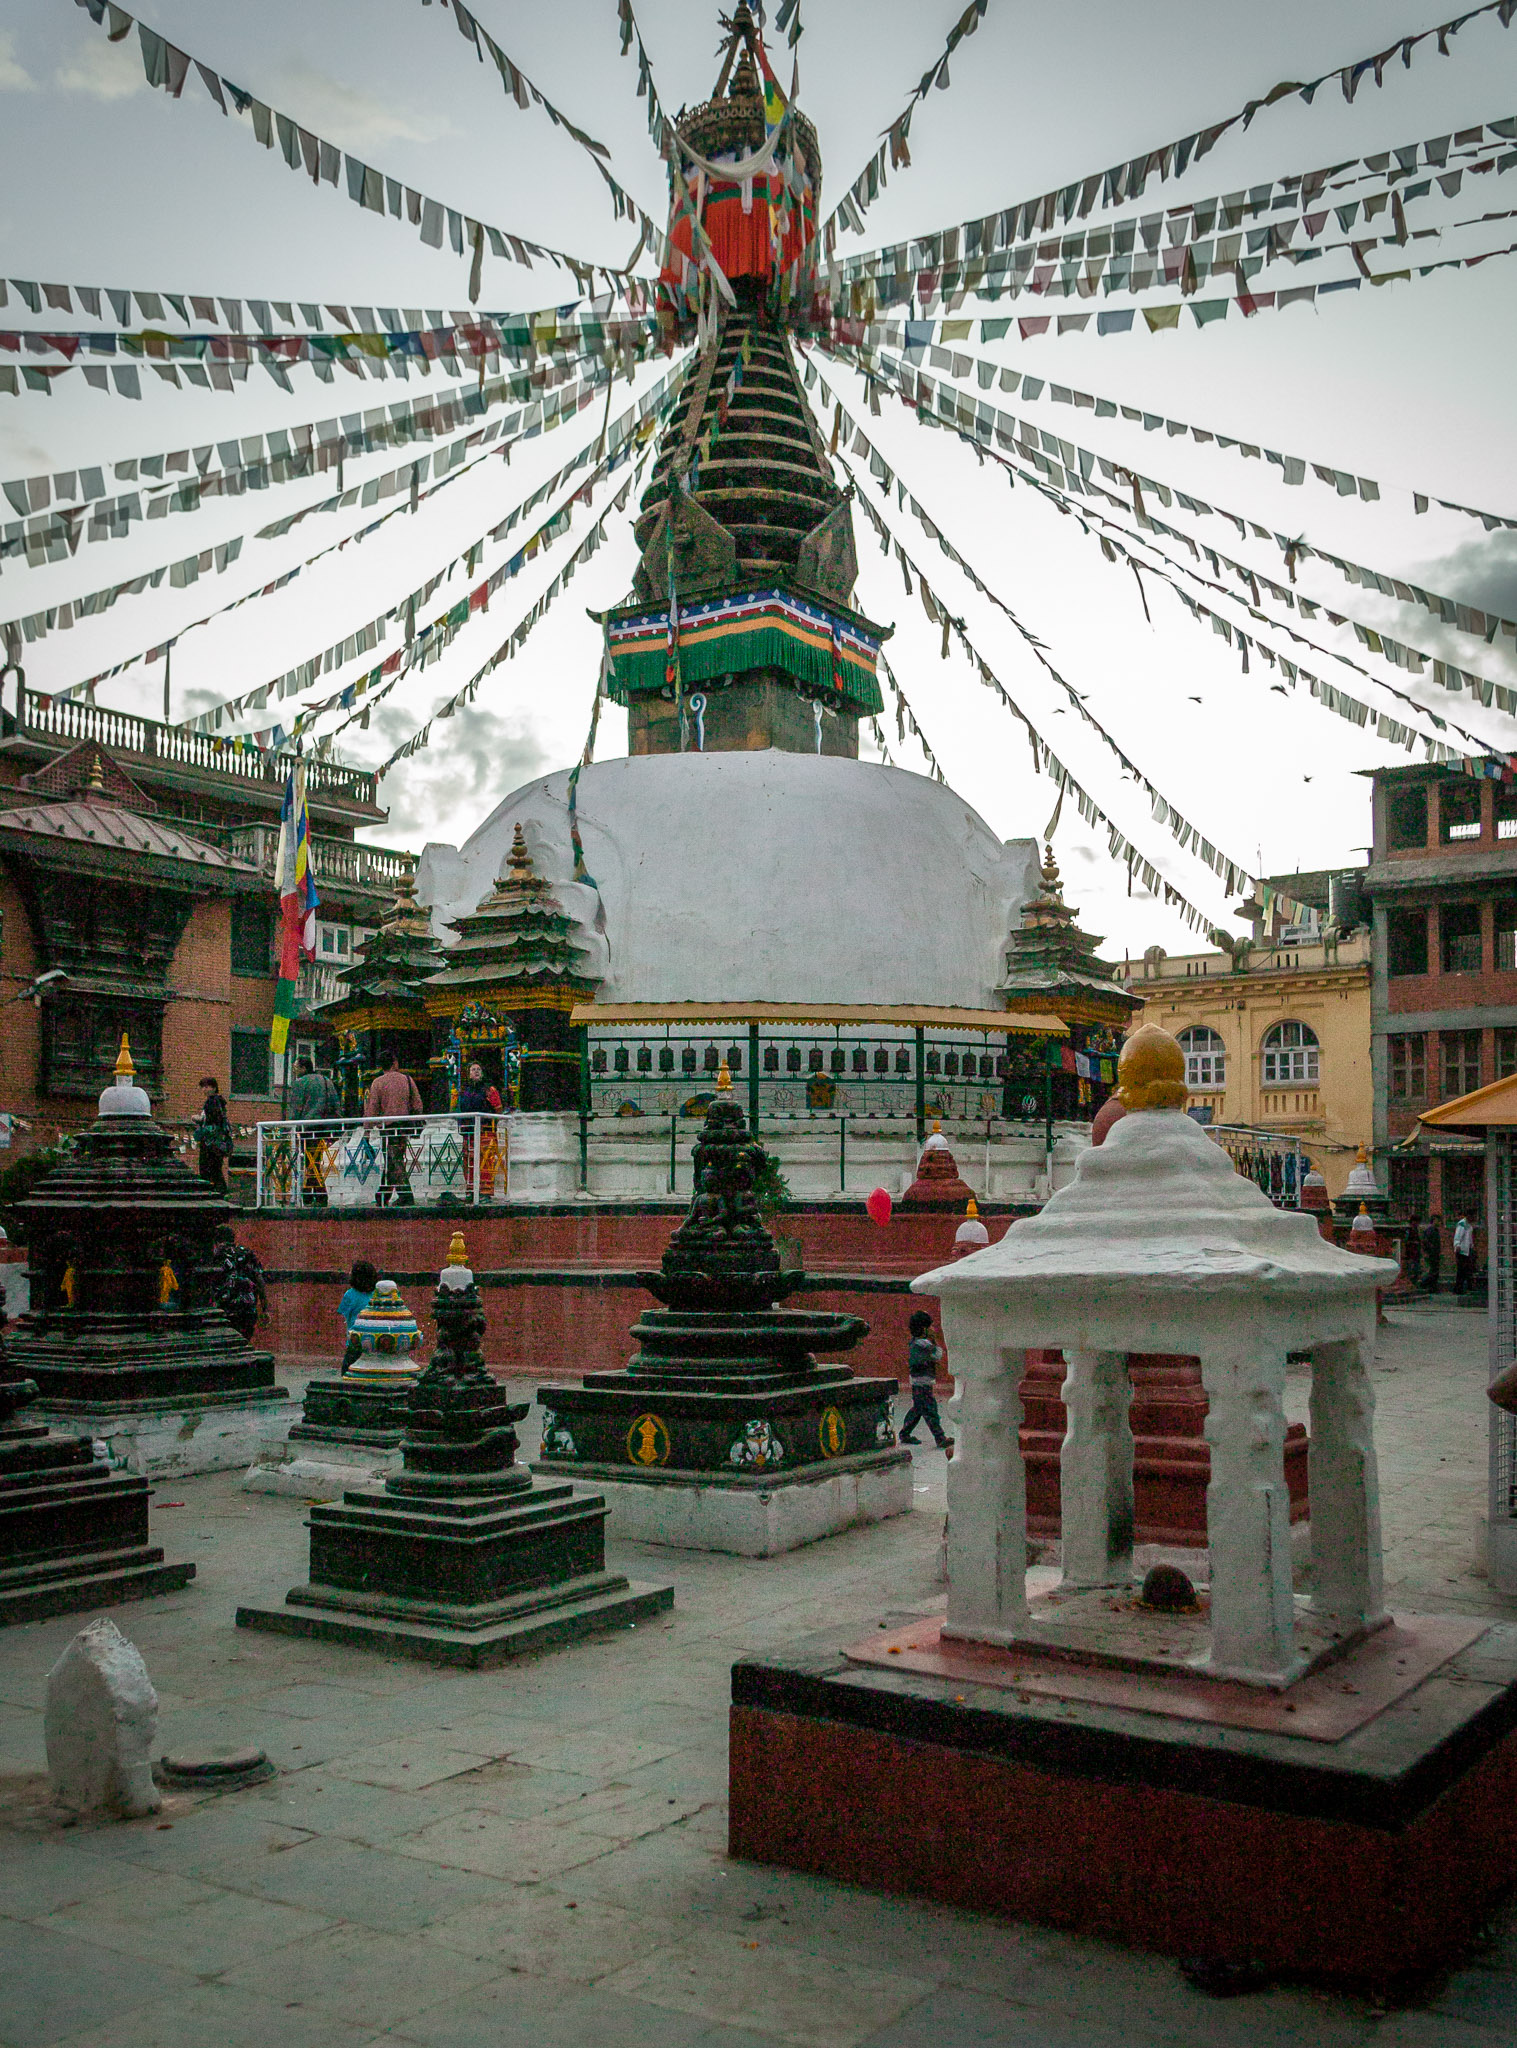 Discovered courtyard Stupa